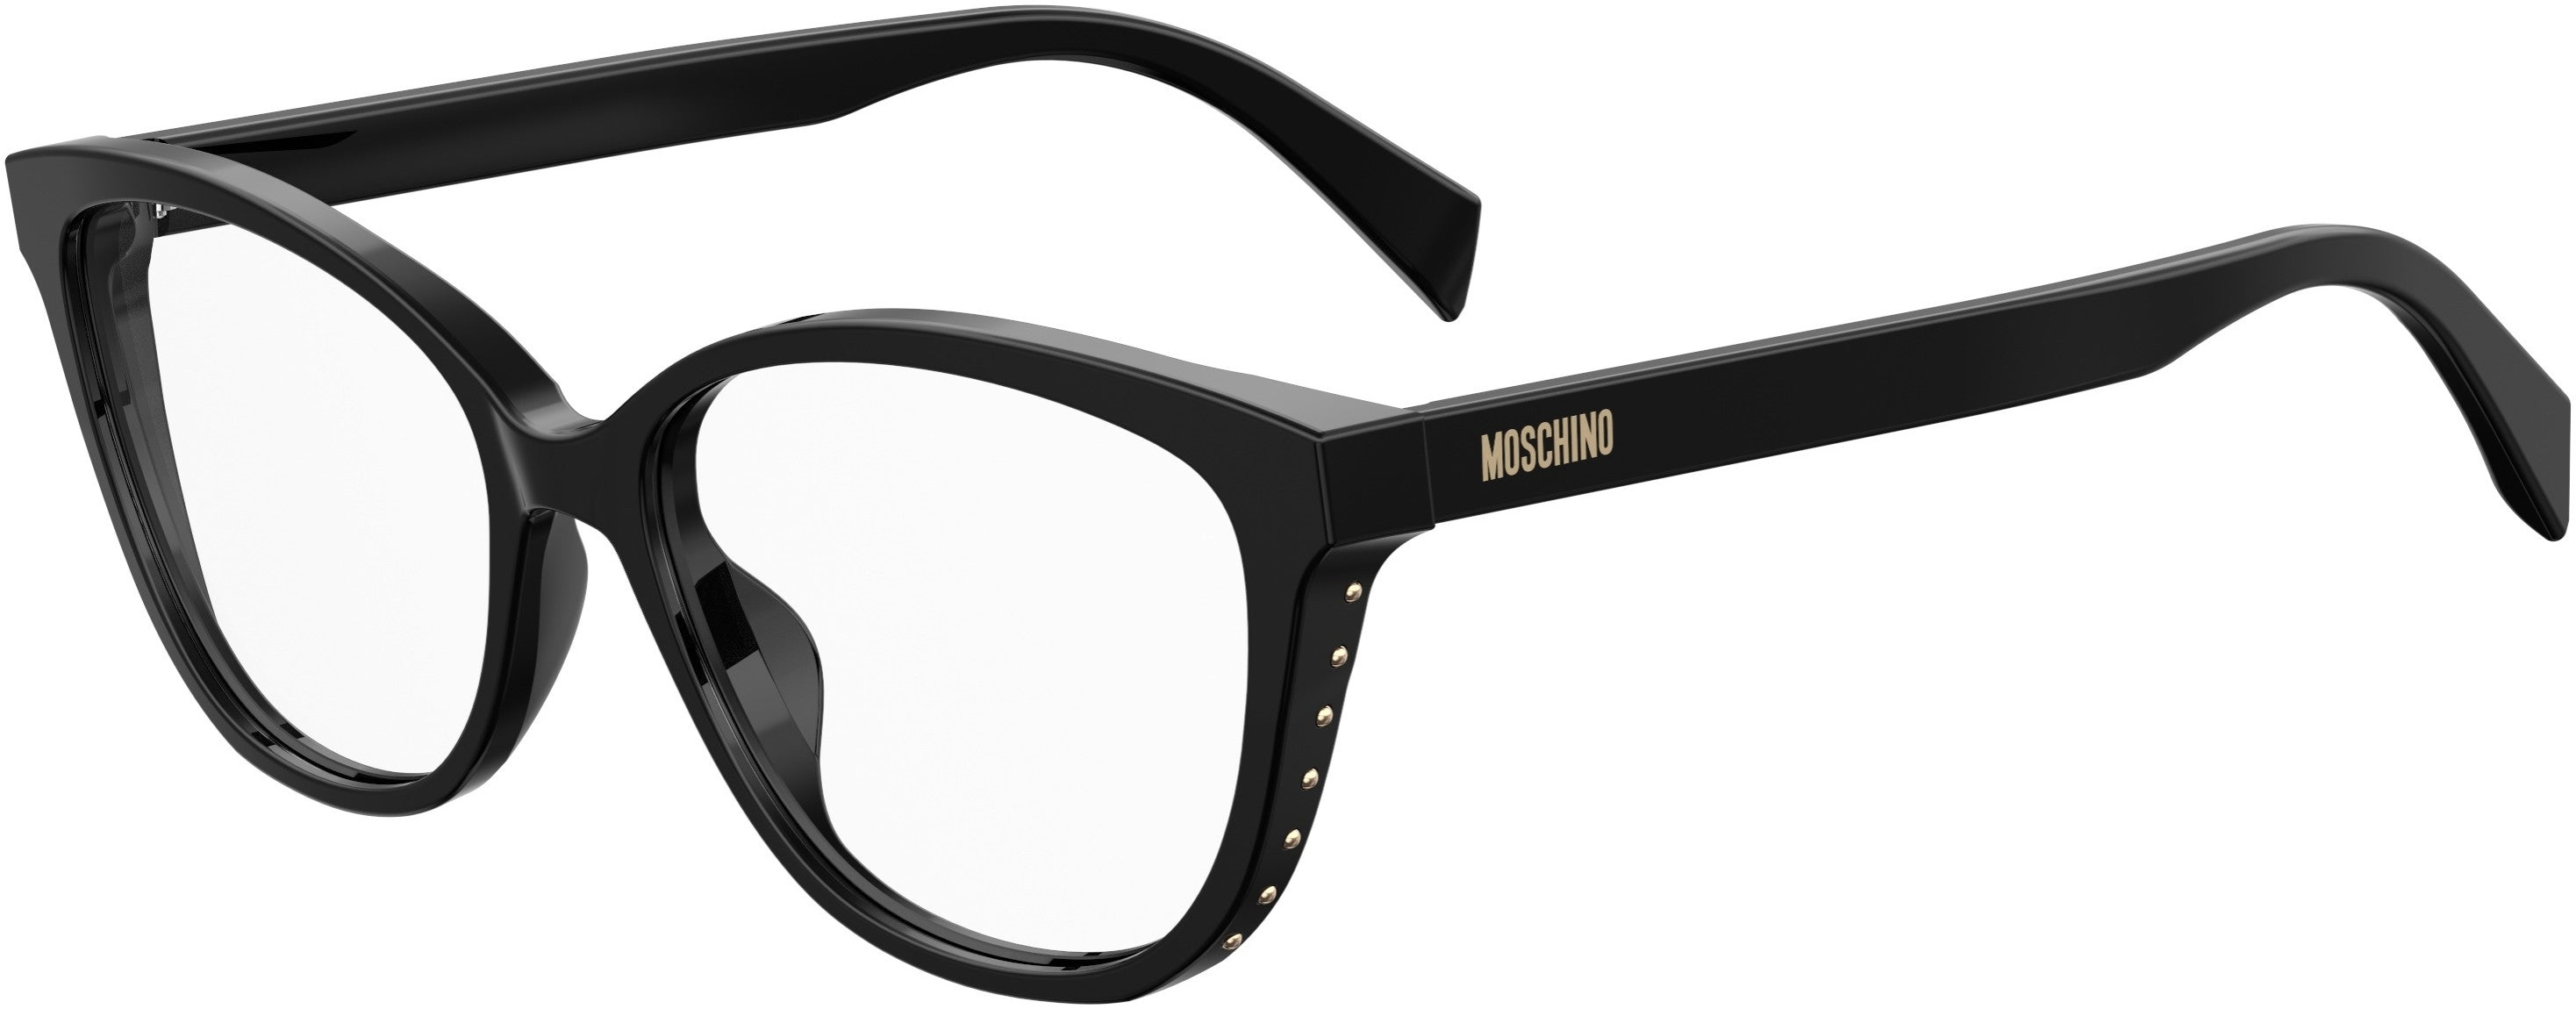  Moschino 549 Cat Eye/butterfly Eyeglasses 0807-0807  Black (00 Demo Lens)